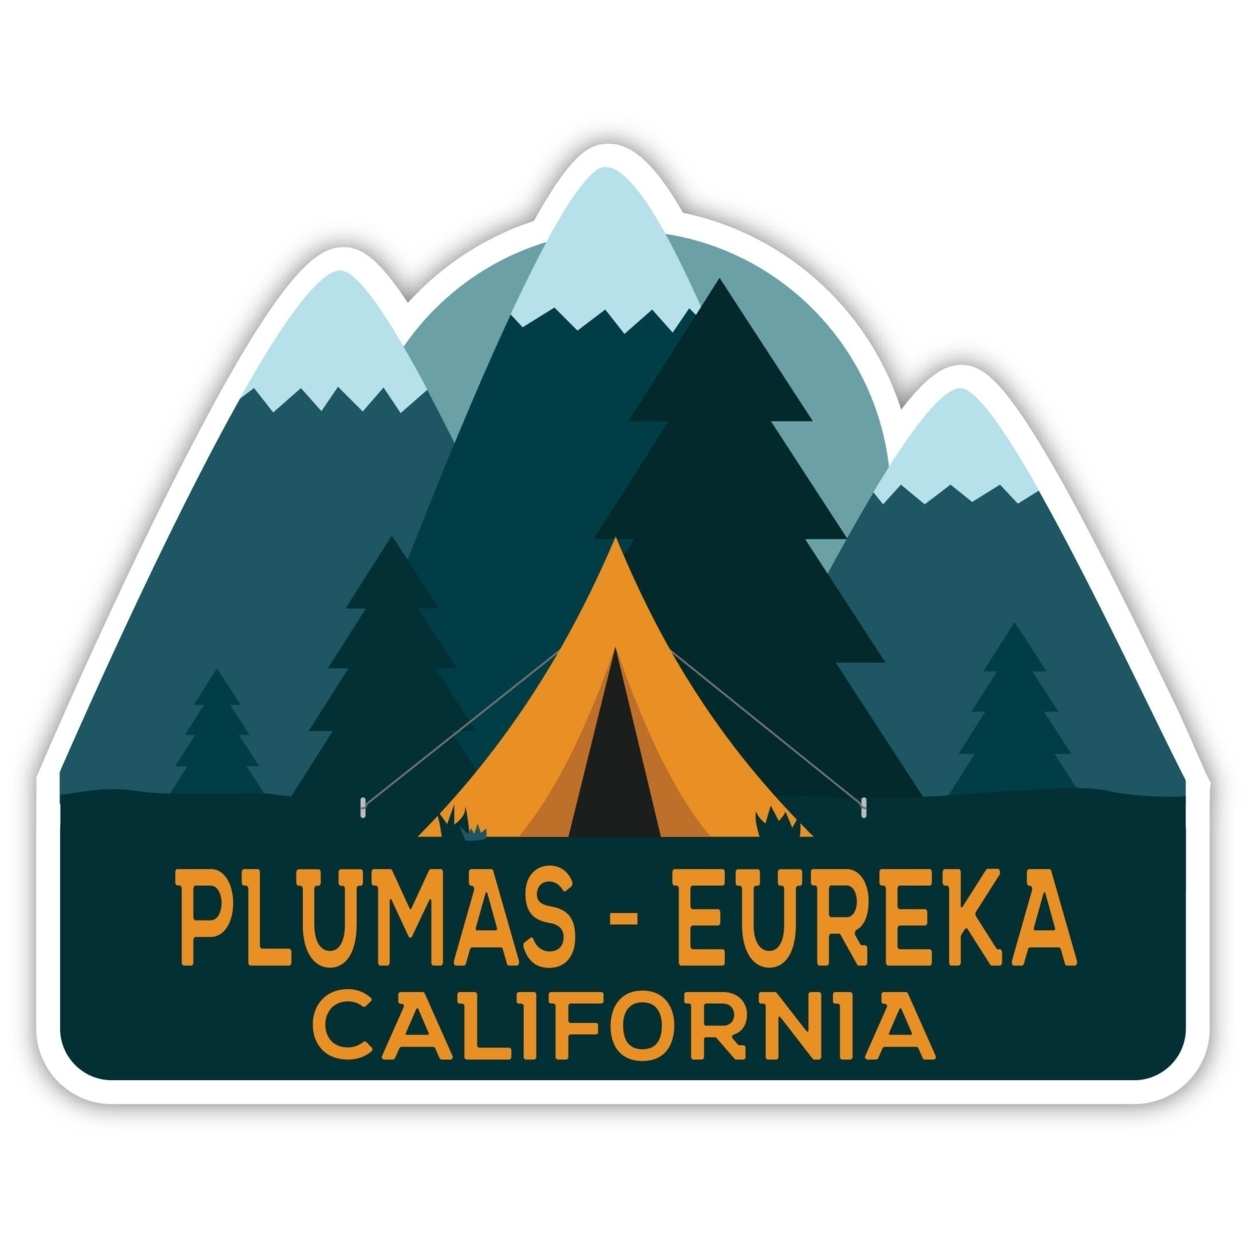 Plumas - Eureka California Souvenir Decorative Stickers (Choose Theme And Size) - Single Unit, 4-Inch, Tent